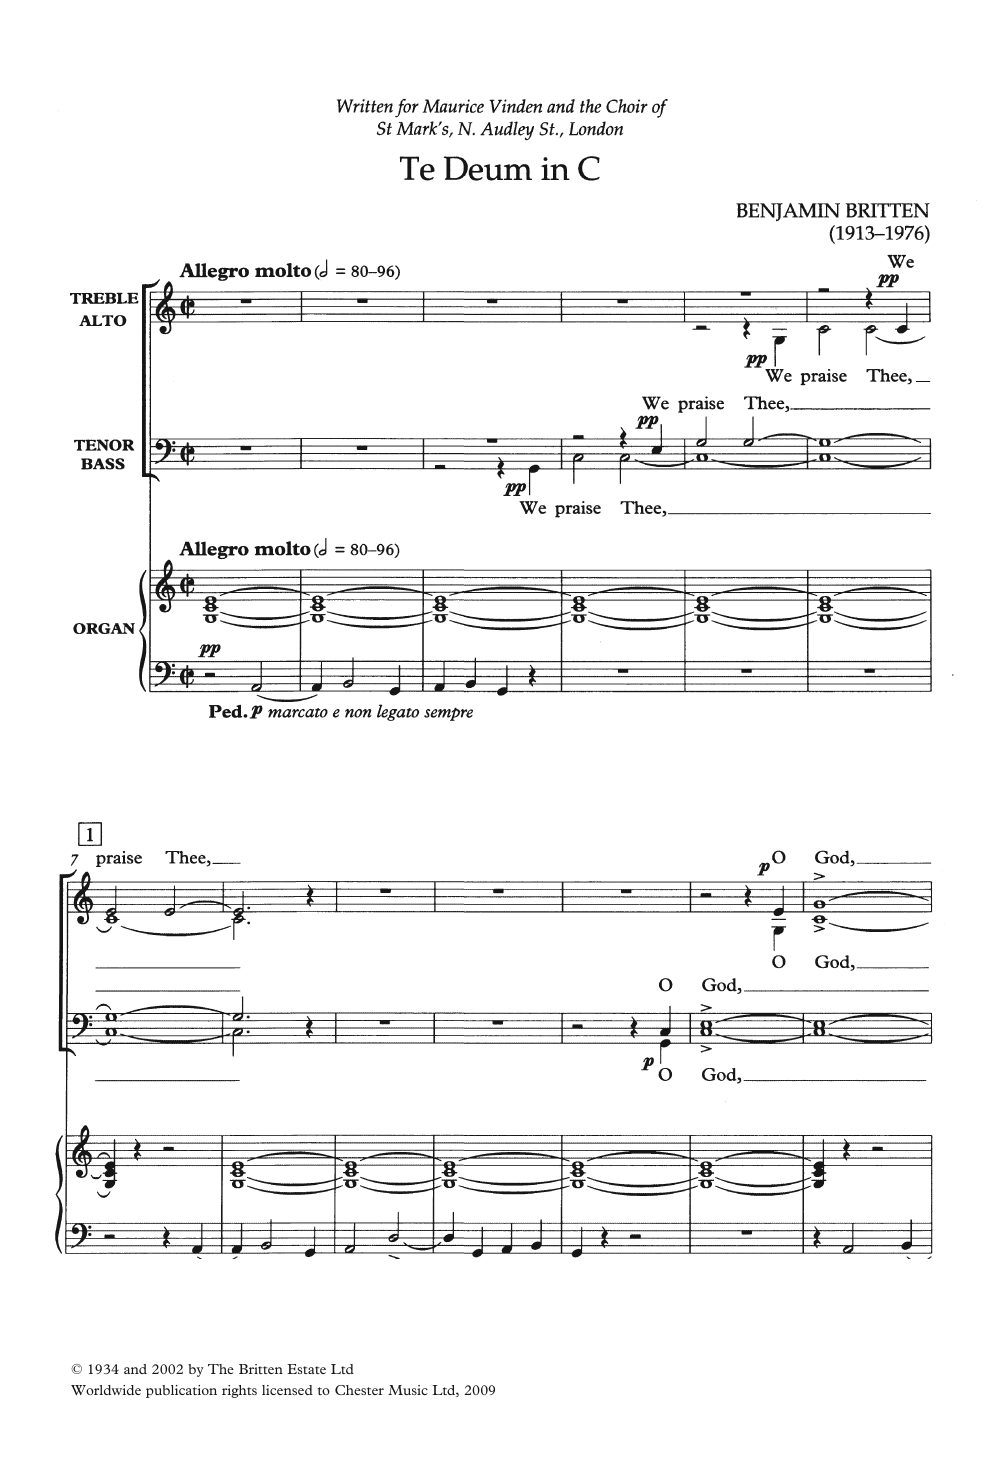 Benjamin Britten Te Deum In C Sheet Music Notes & Chords for Choir - Download or Print PDF